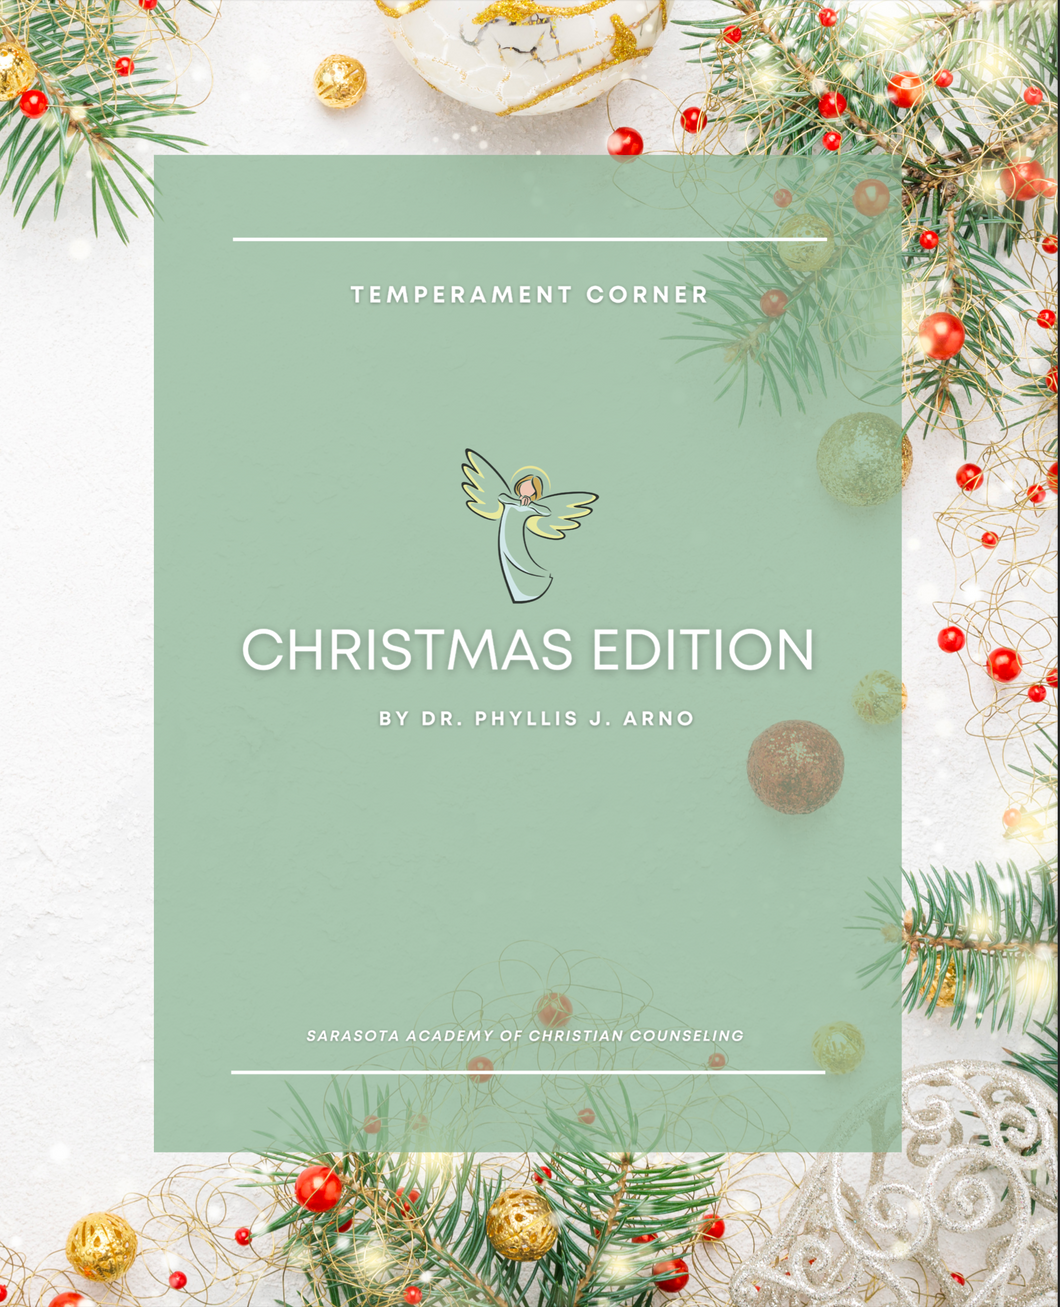 Temperament Corner: Christmas Edition Booklet